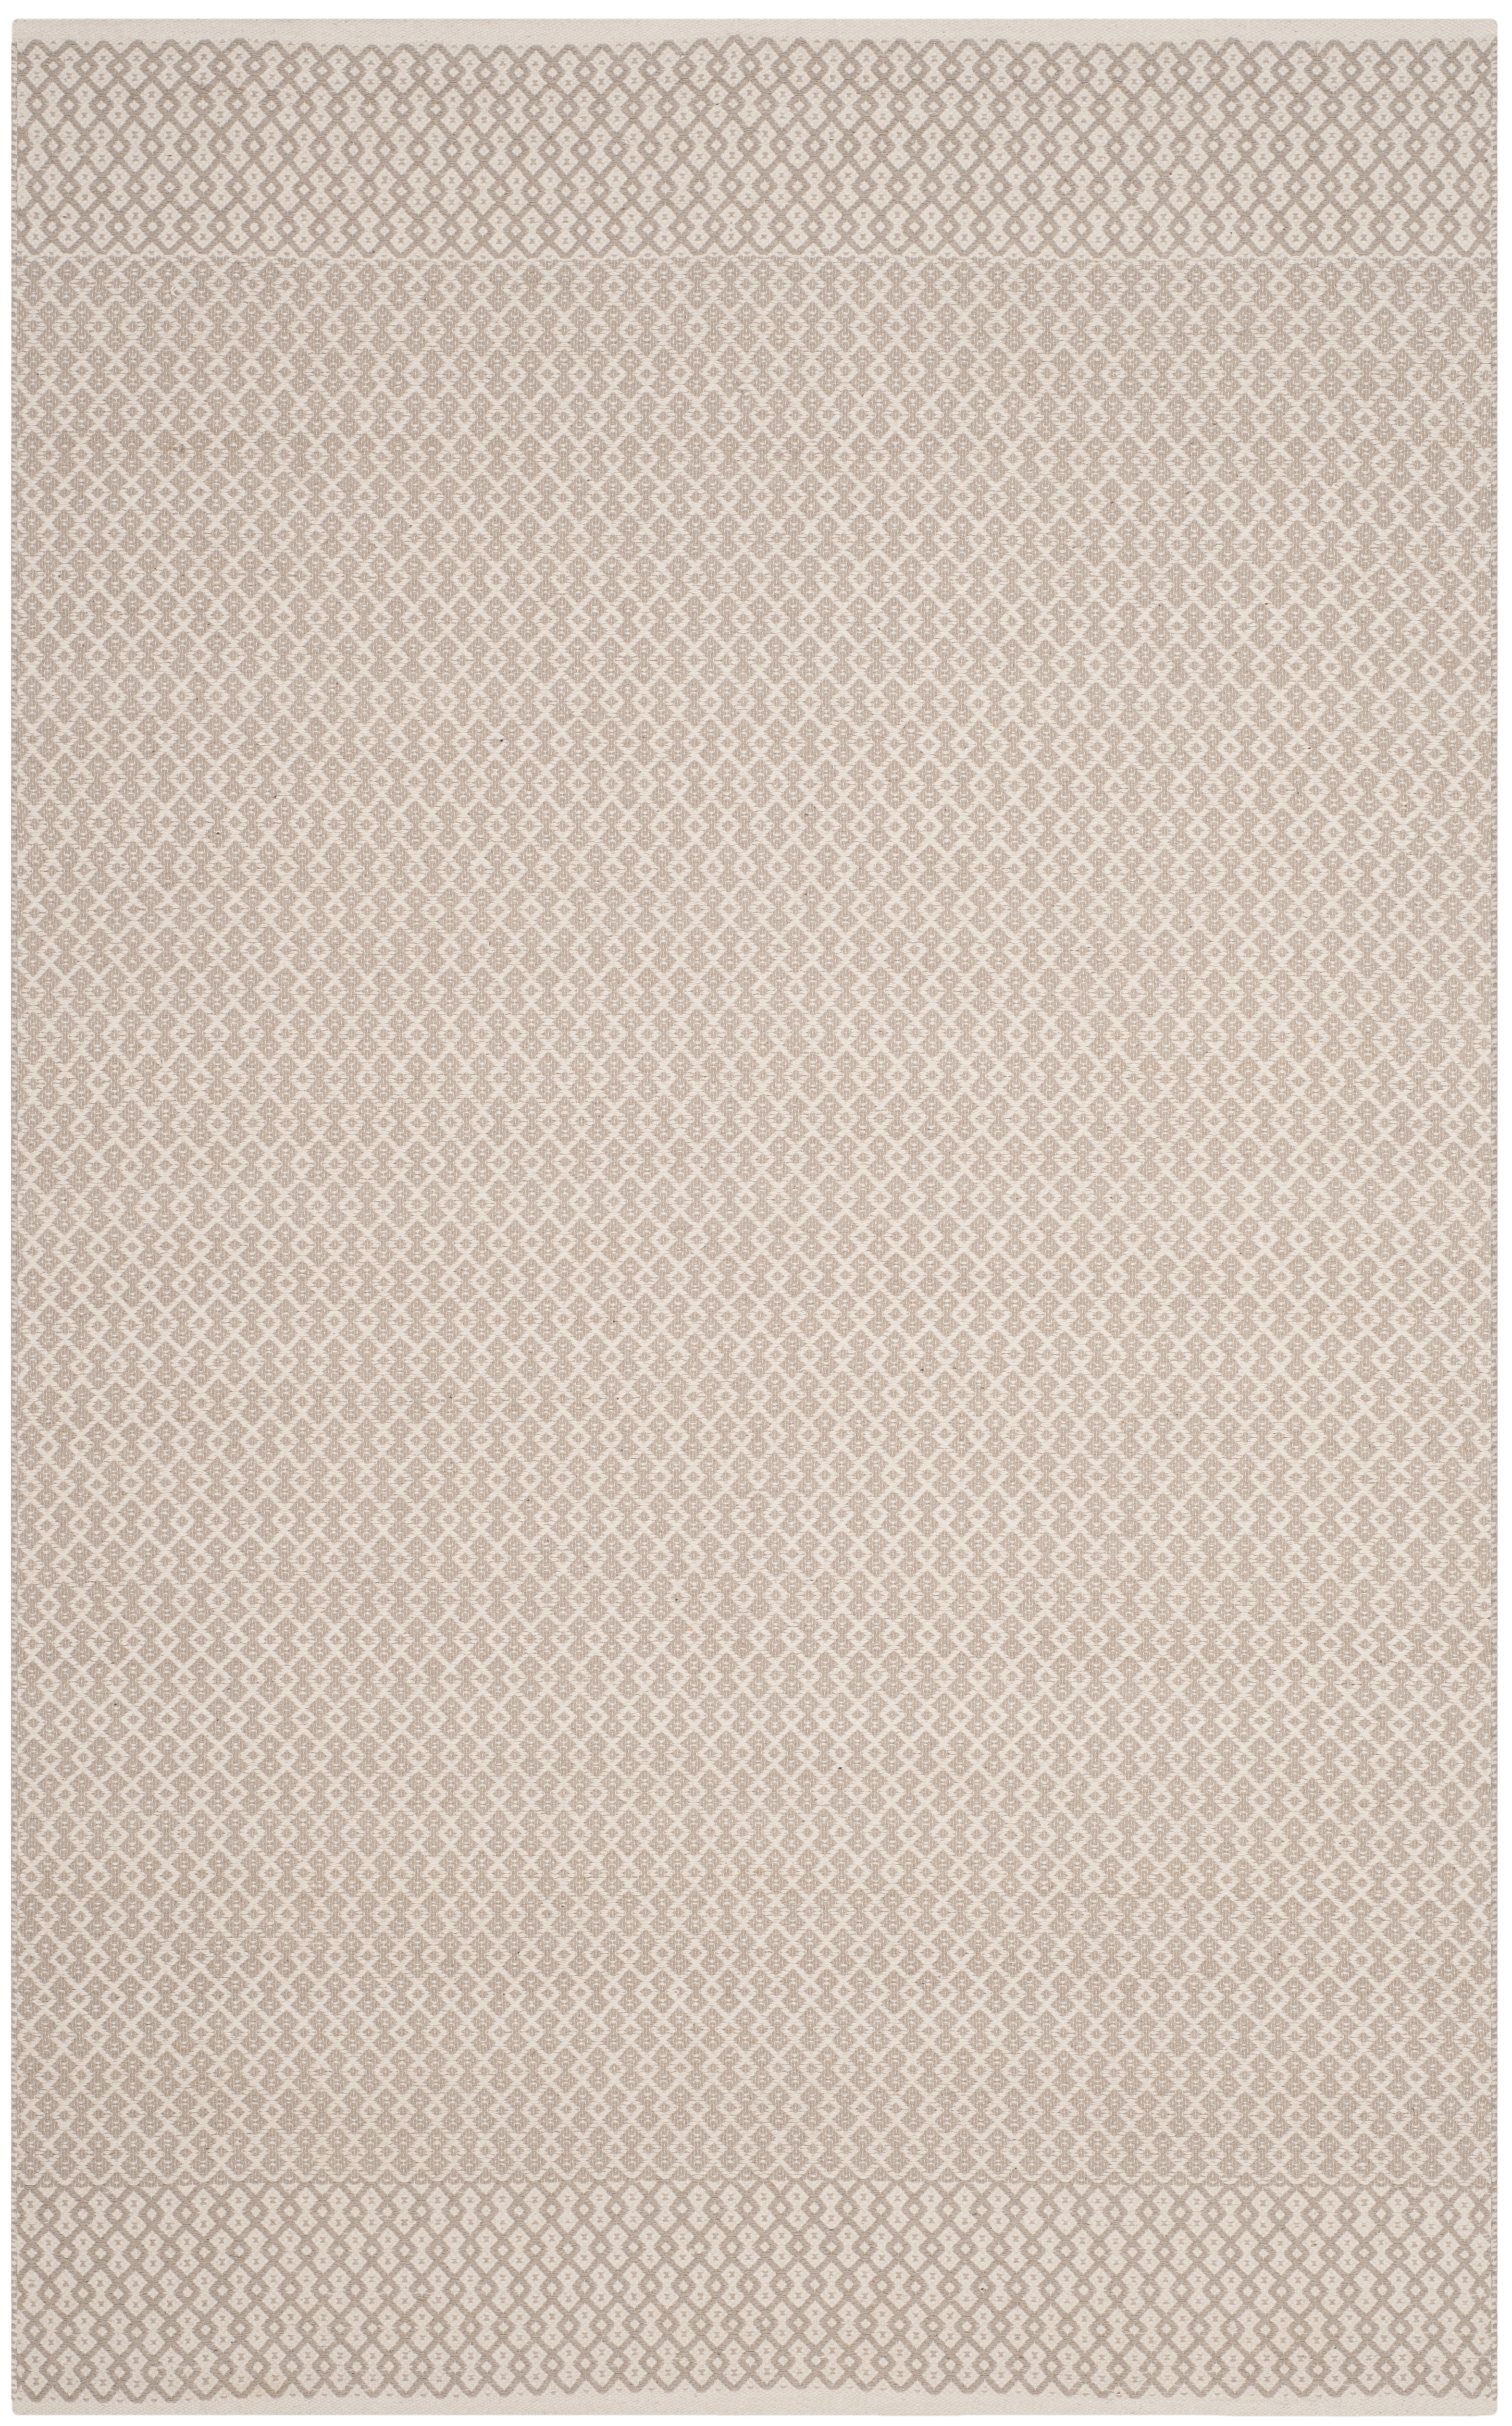 Arlo Home Hand Woven Area Rug, MTK339A, Ivory/Grey,  5' X 8' - Image 0